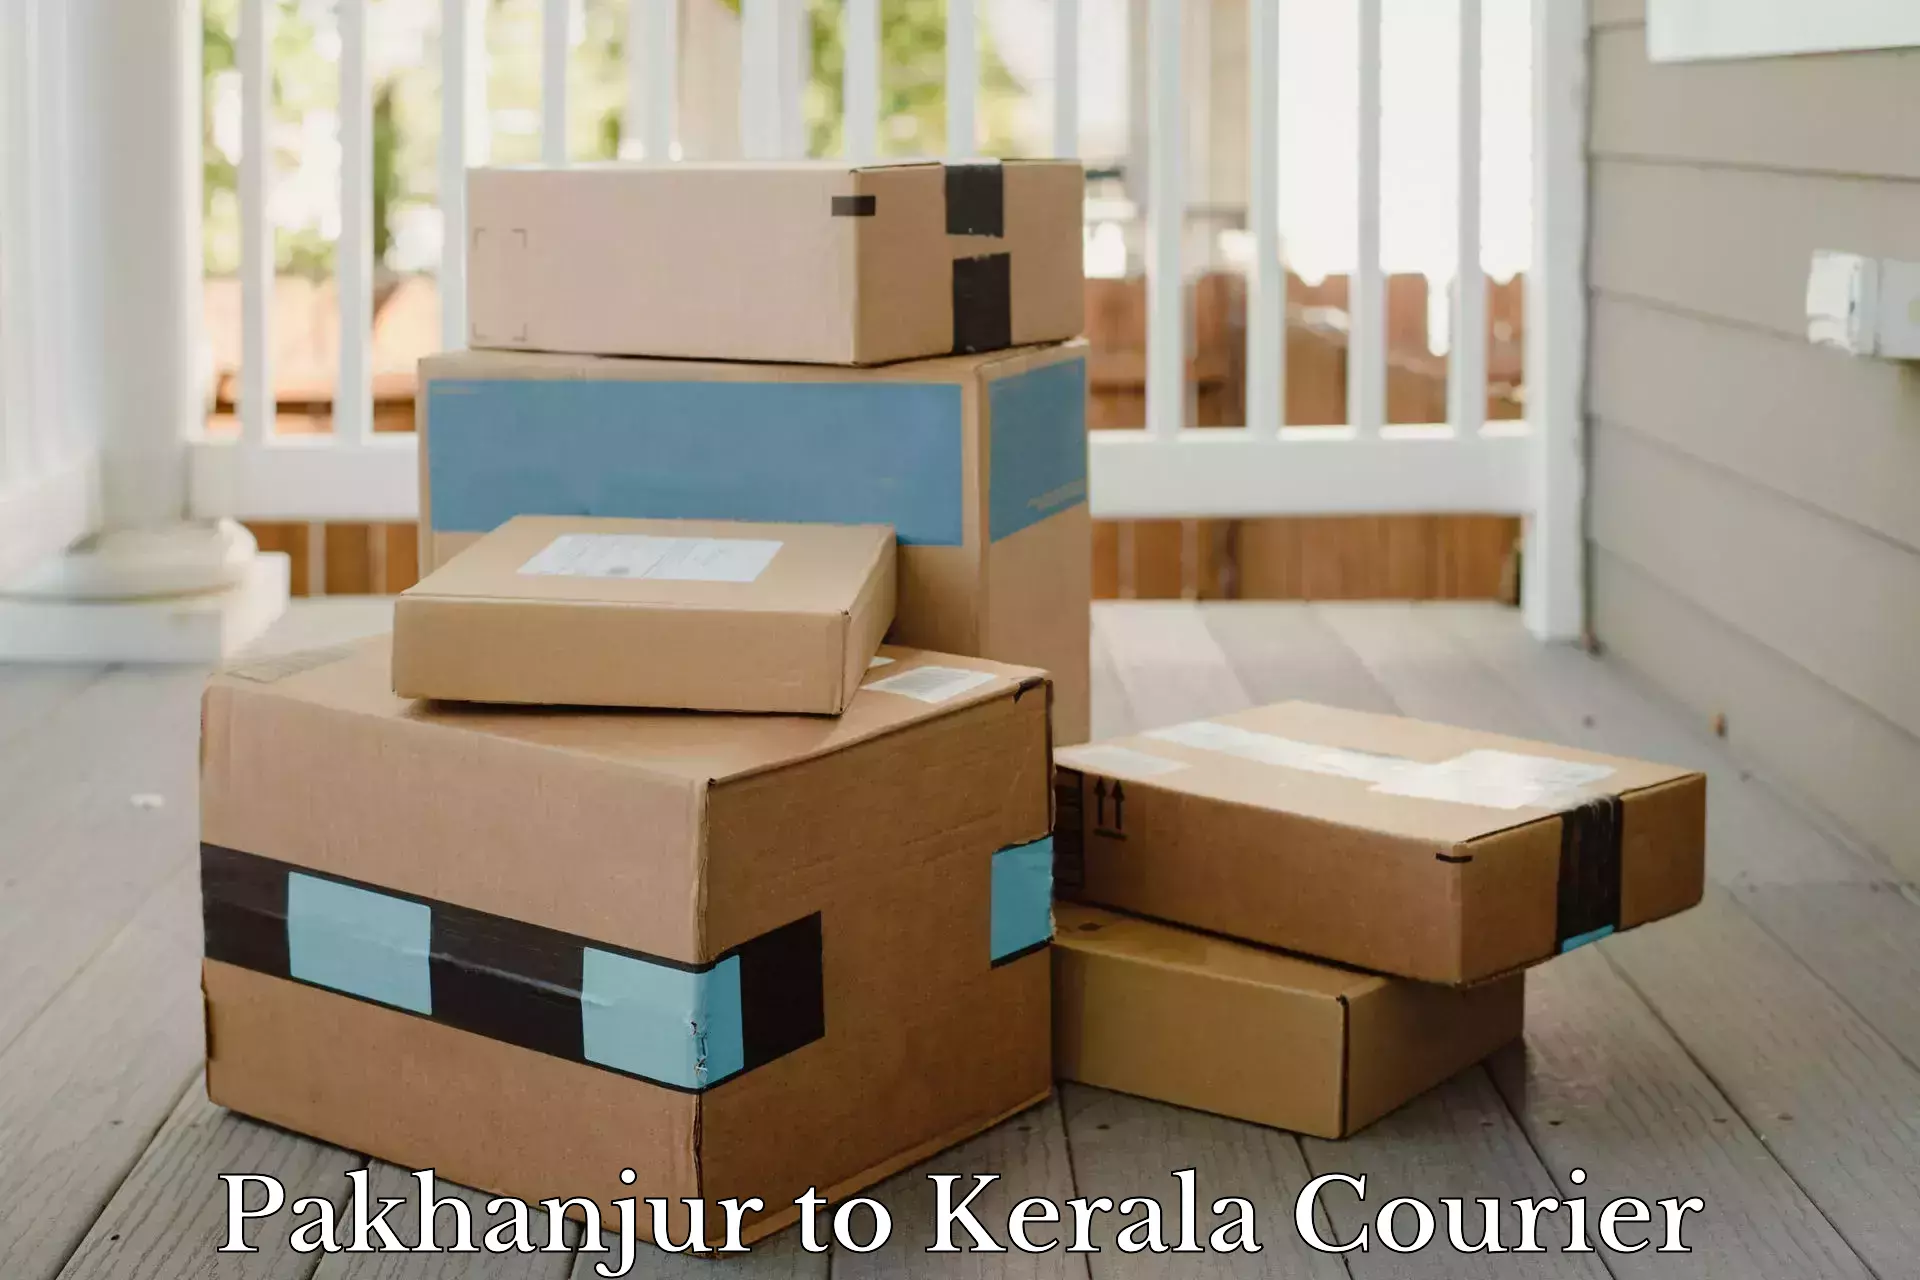 Efficient logistics management Pakhanjur to Ernakulam